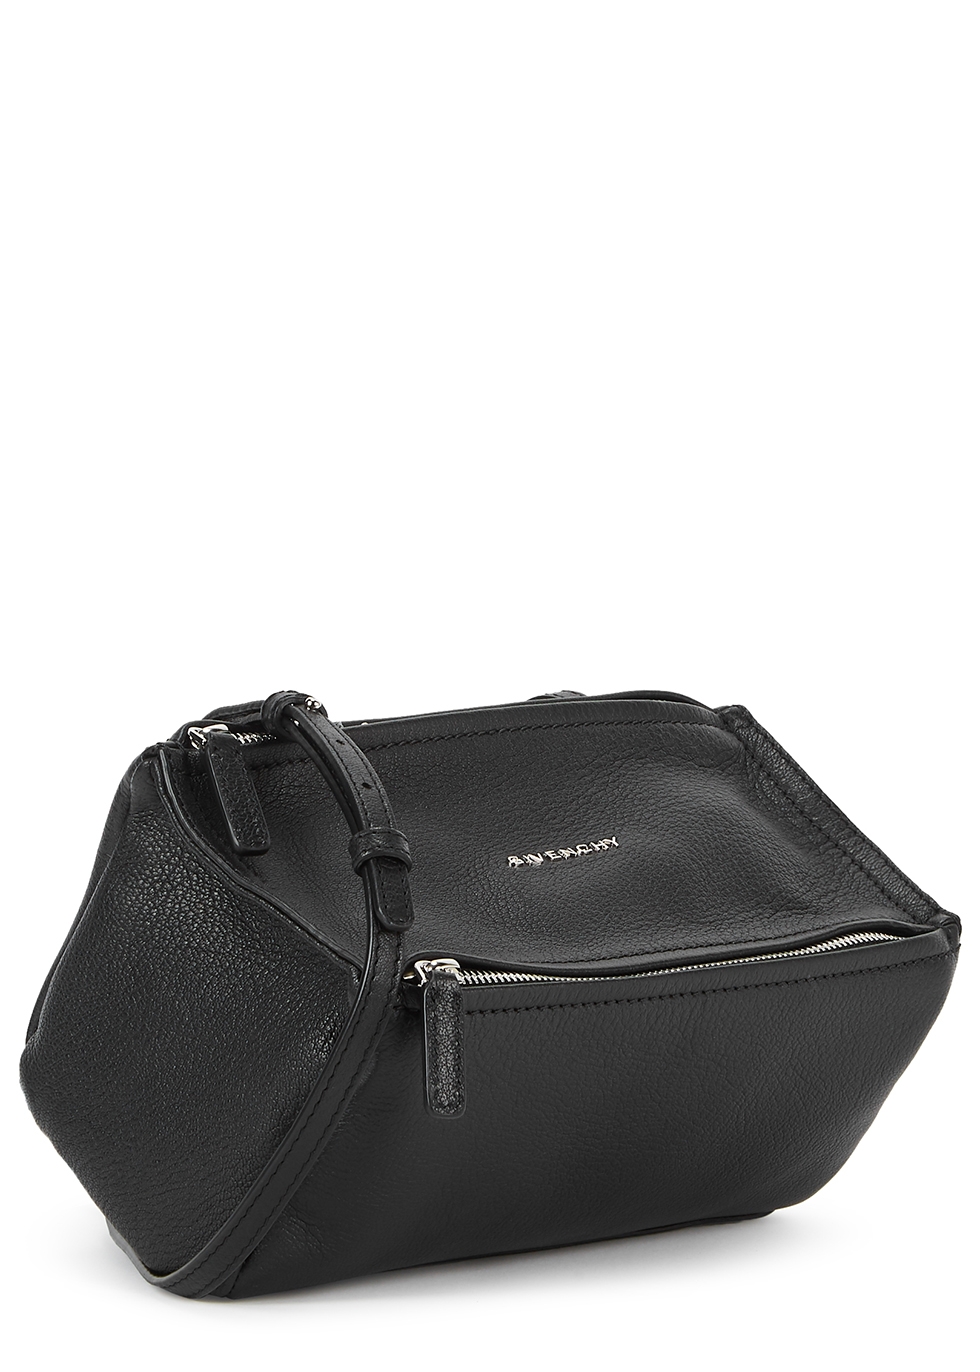 Givenchy Pandora mini leather shoulder 